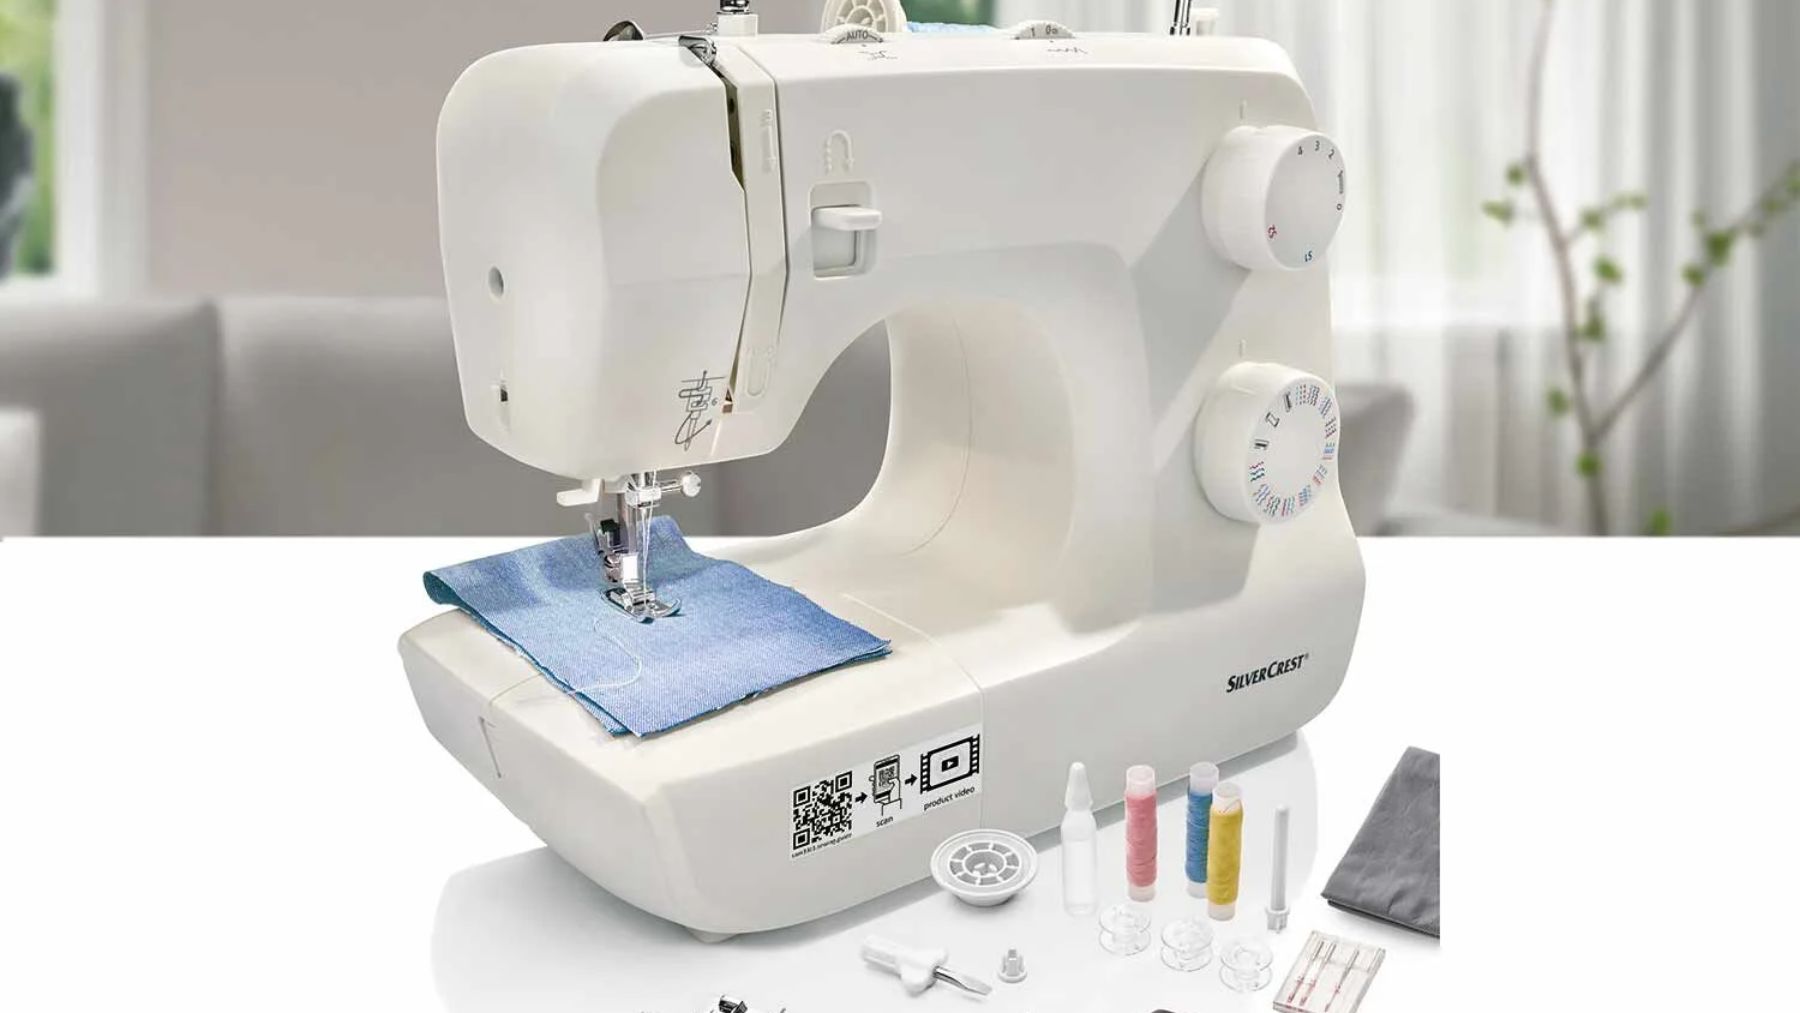 Descubre la máquina de coser de Lidl que todos esperan